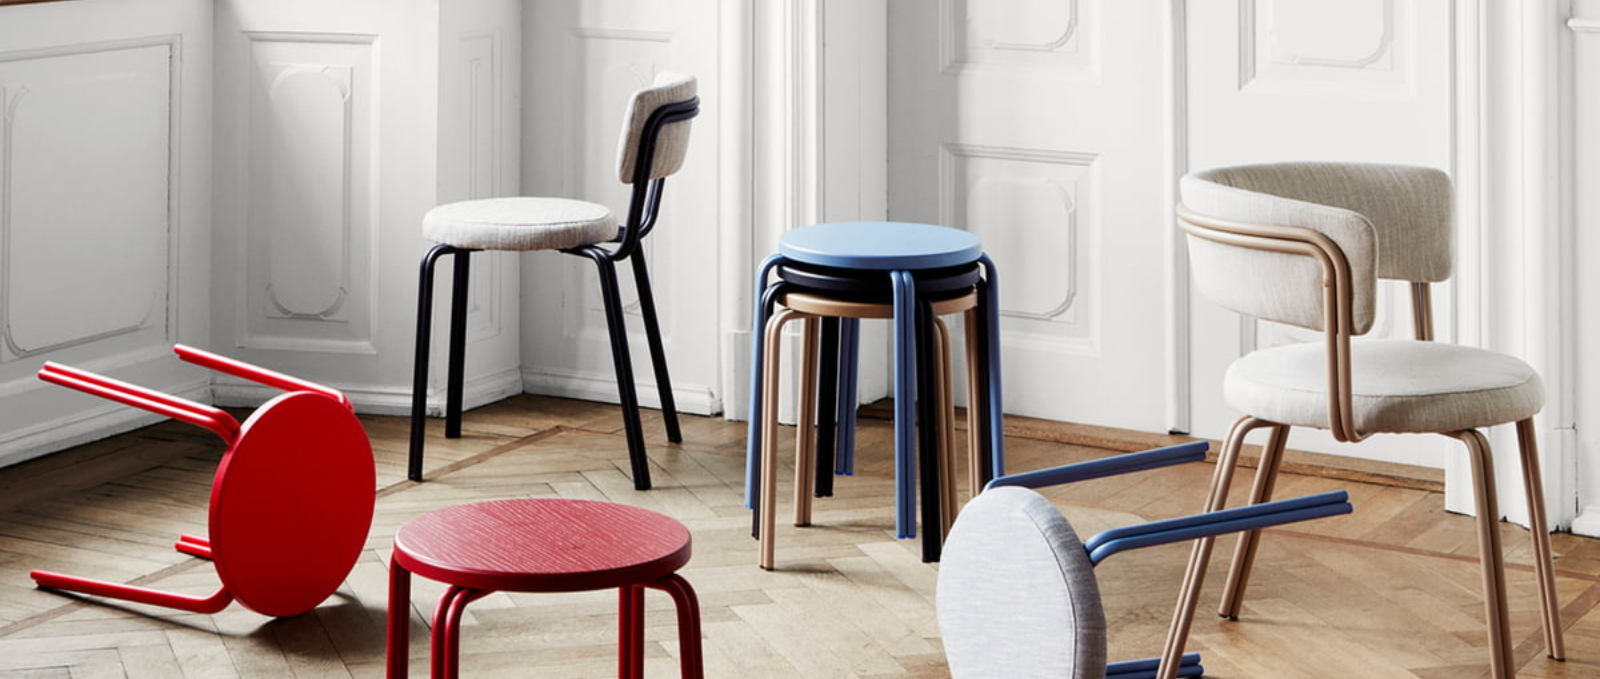 Stühle I Coole Designs für jedes Zuhause - Nordly Living